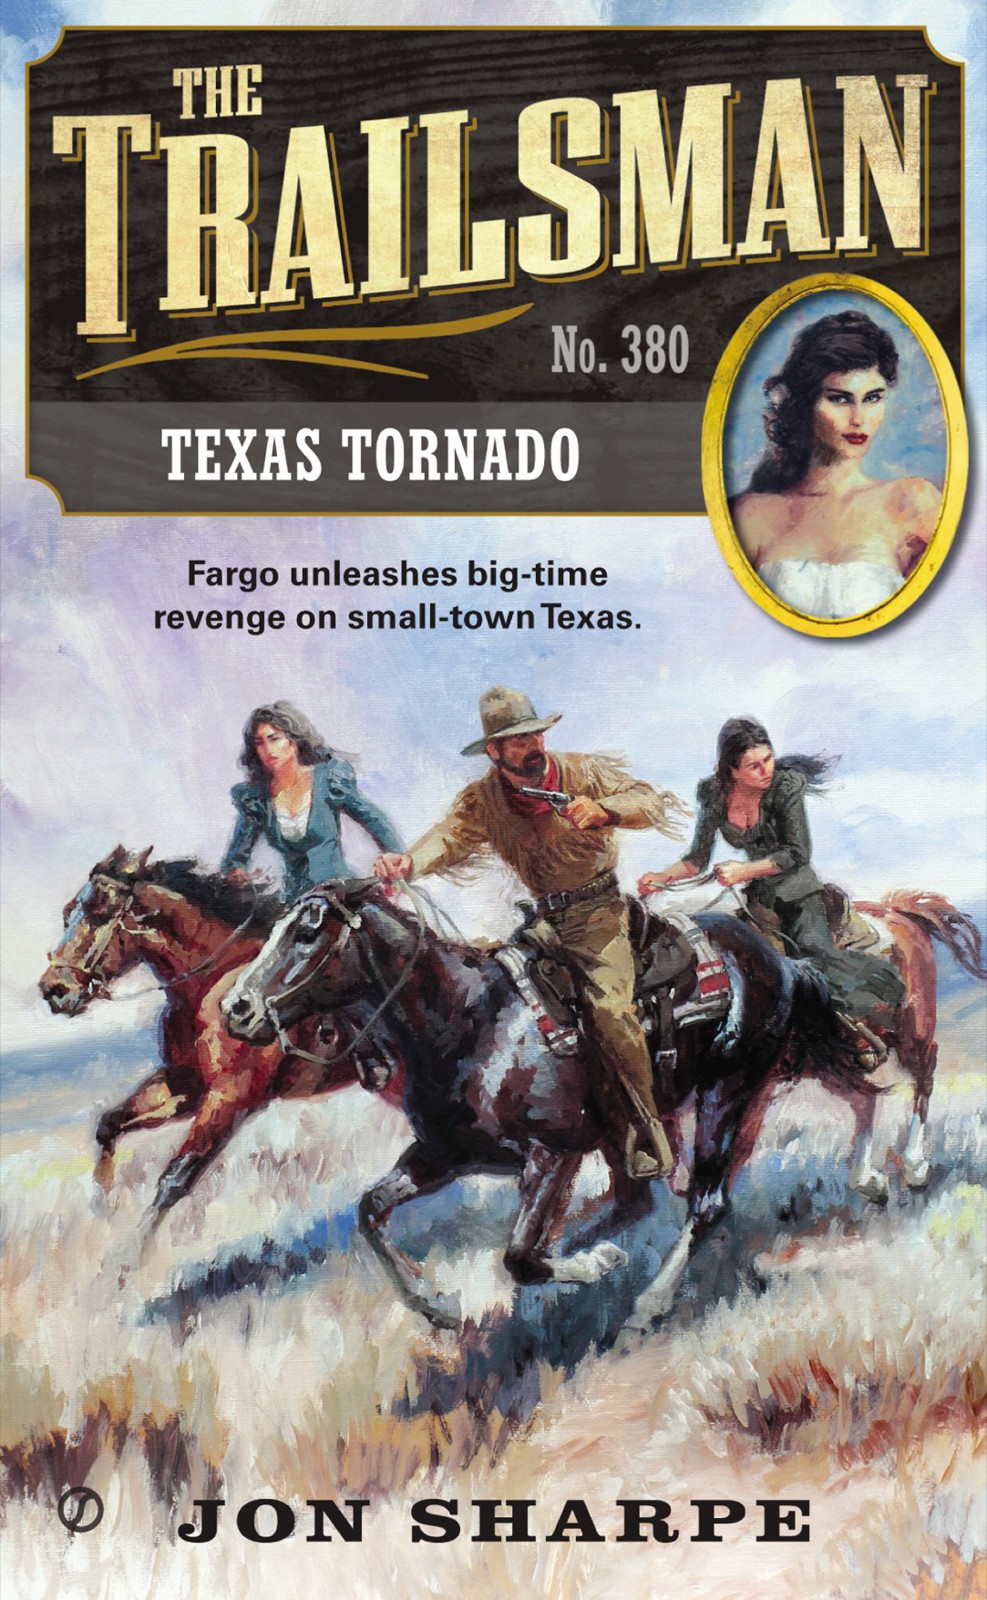 Texas Tornado by Jon Sharpe